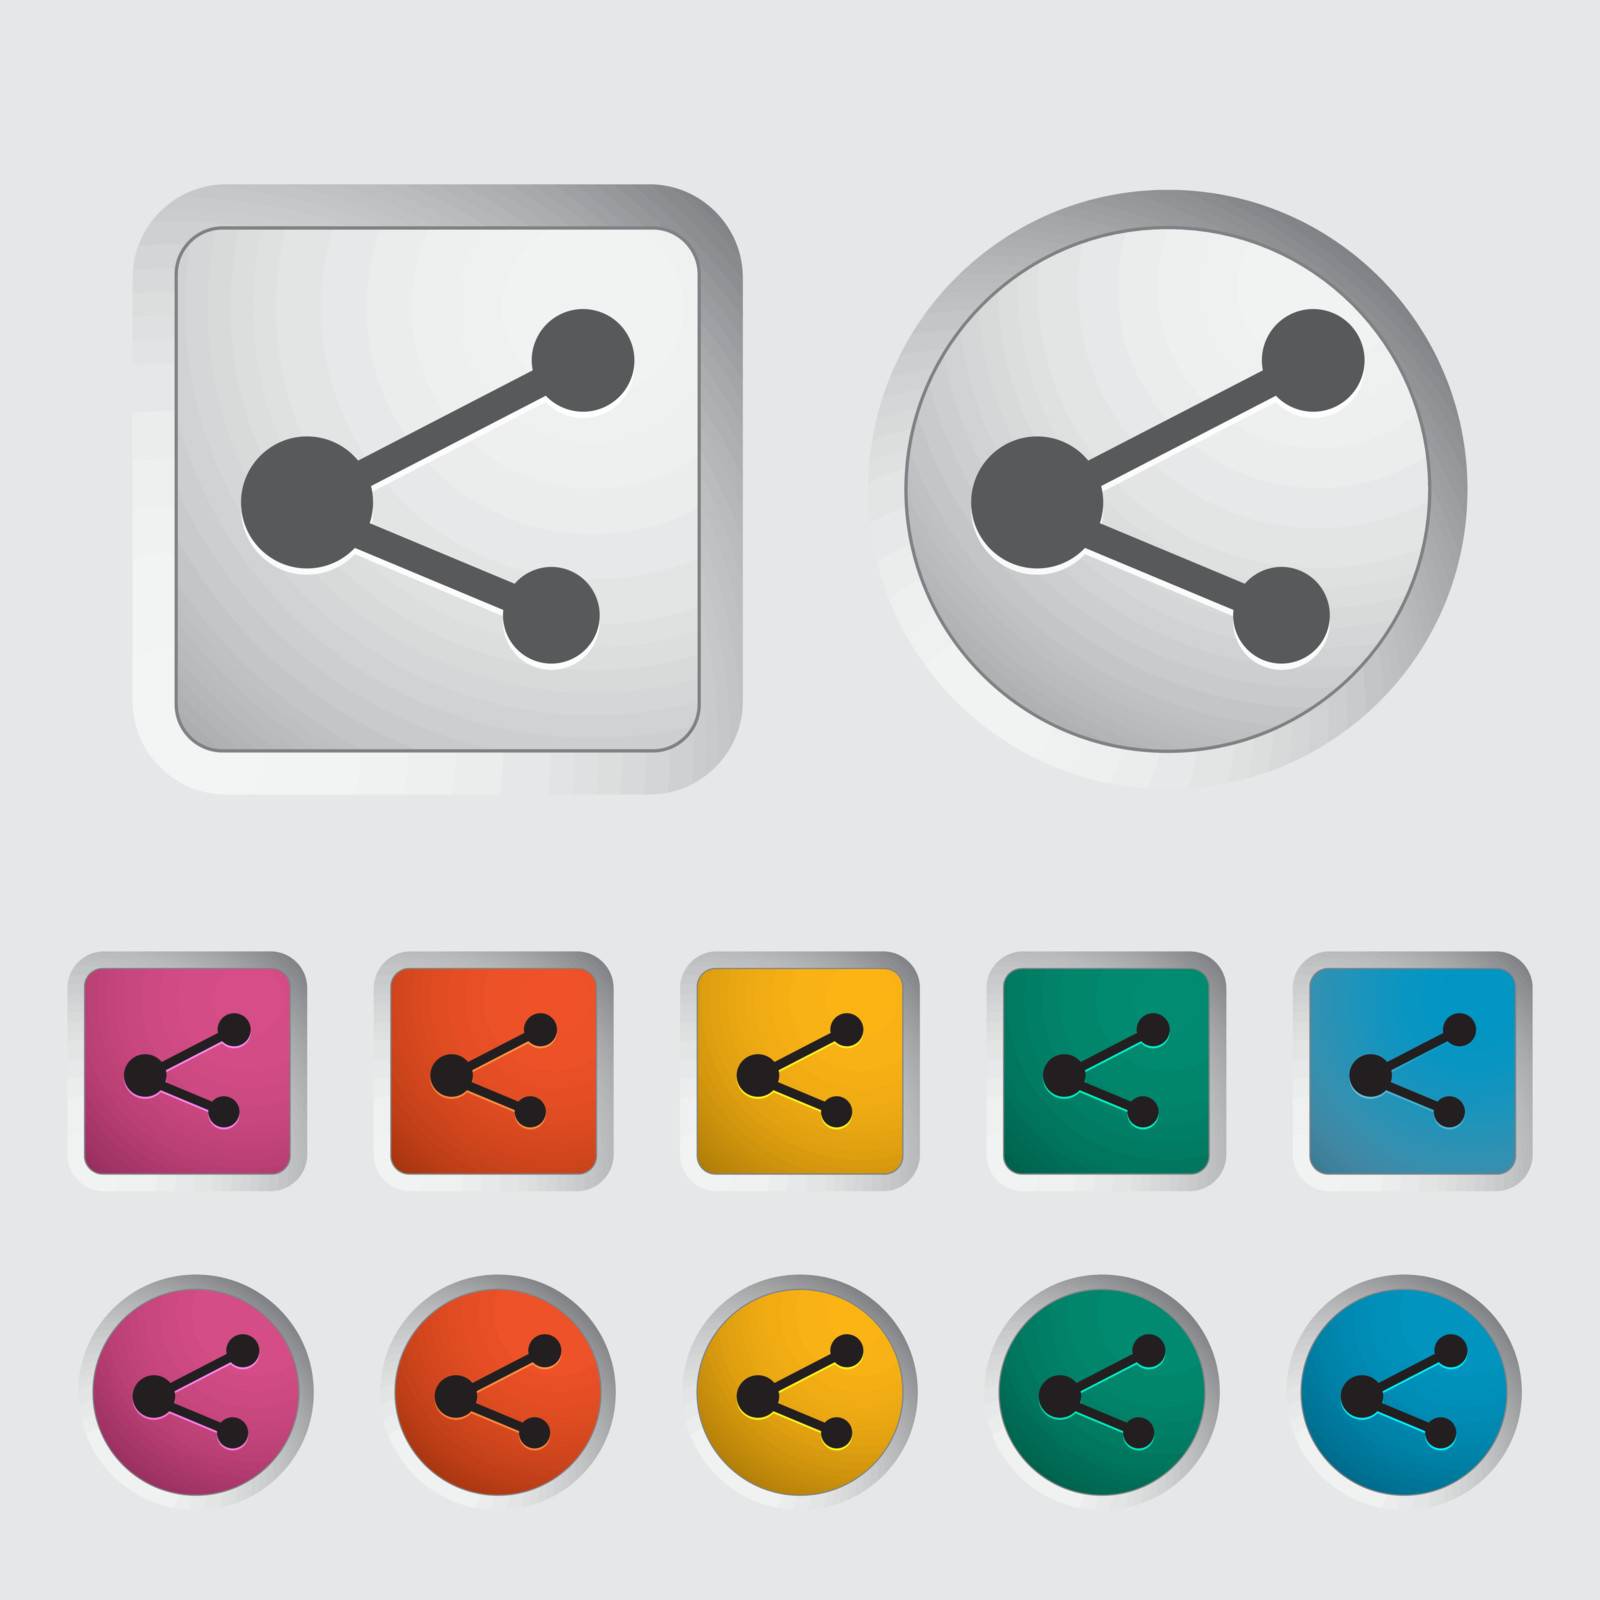 Share single icon. Vector illustration.